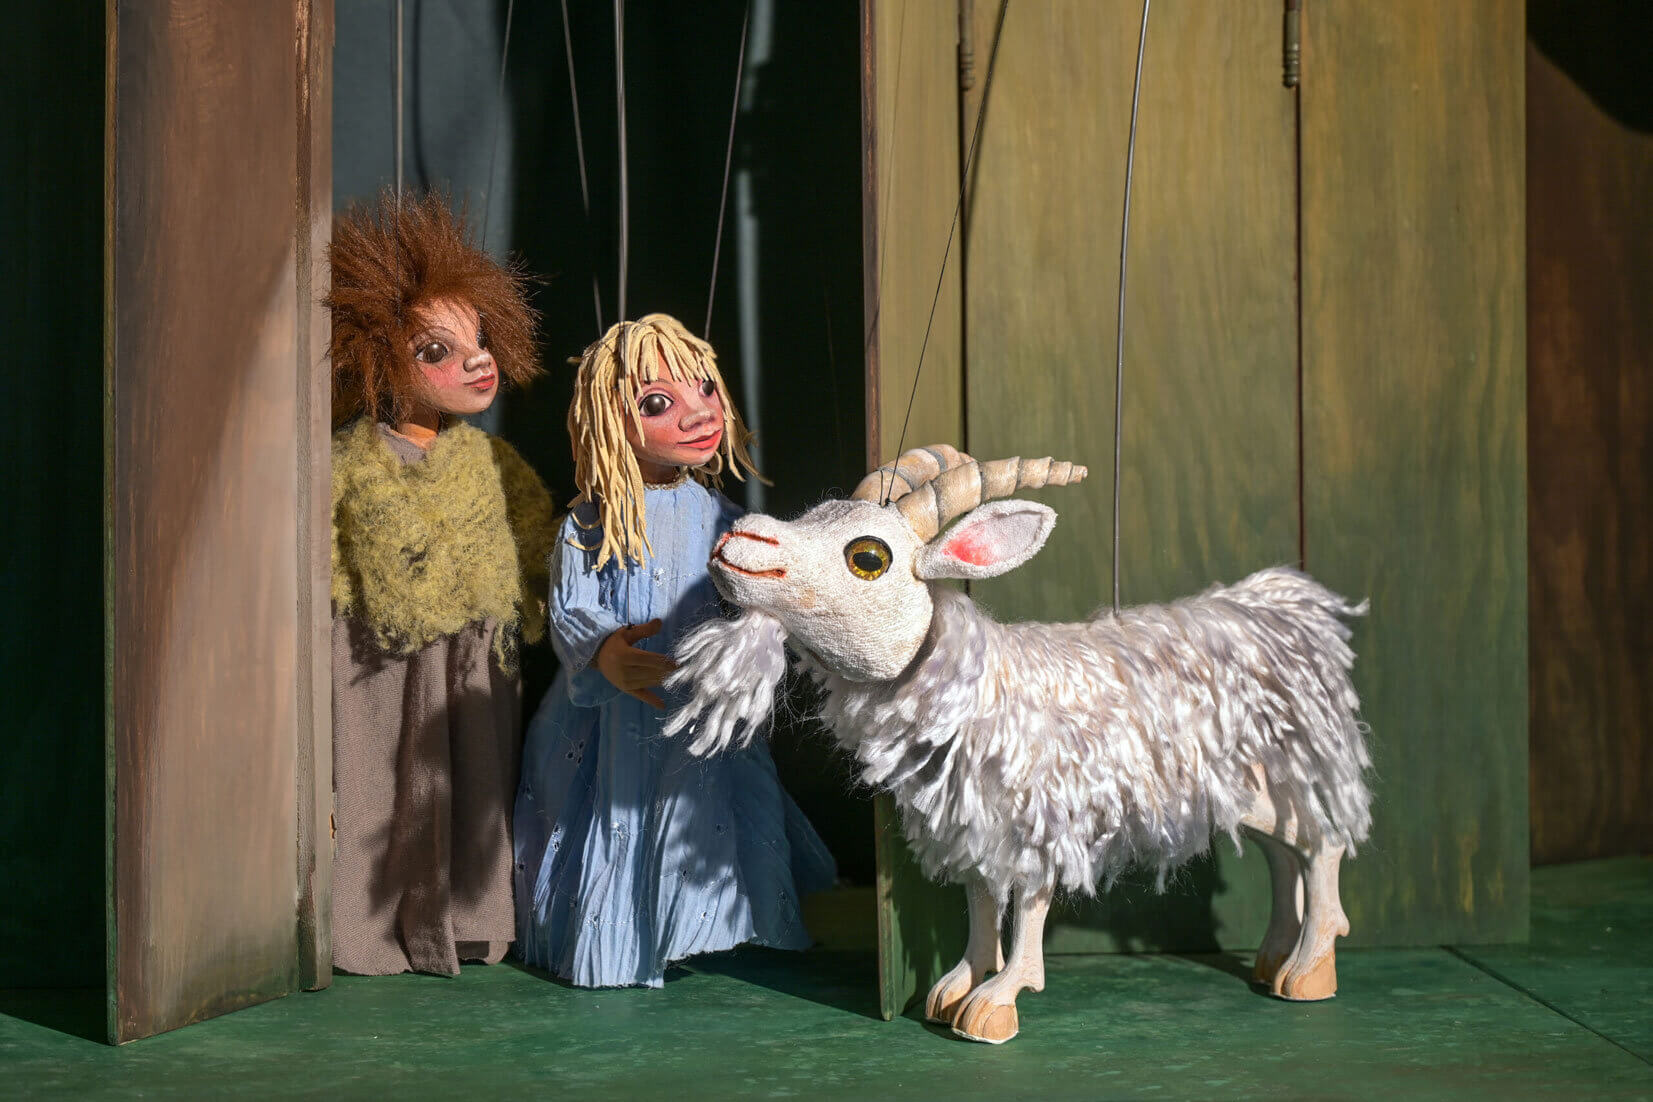 Foto: Puppen- und Figurenspiel “Zottelhaube”. Fotoautor: Ambrella Figurentheater, Hamburg